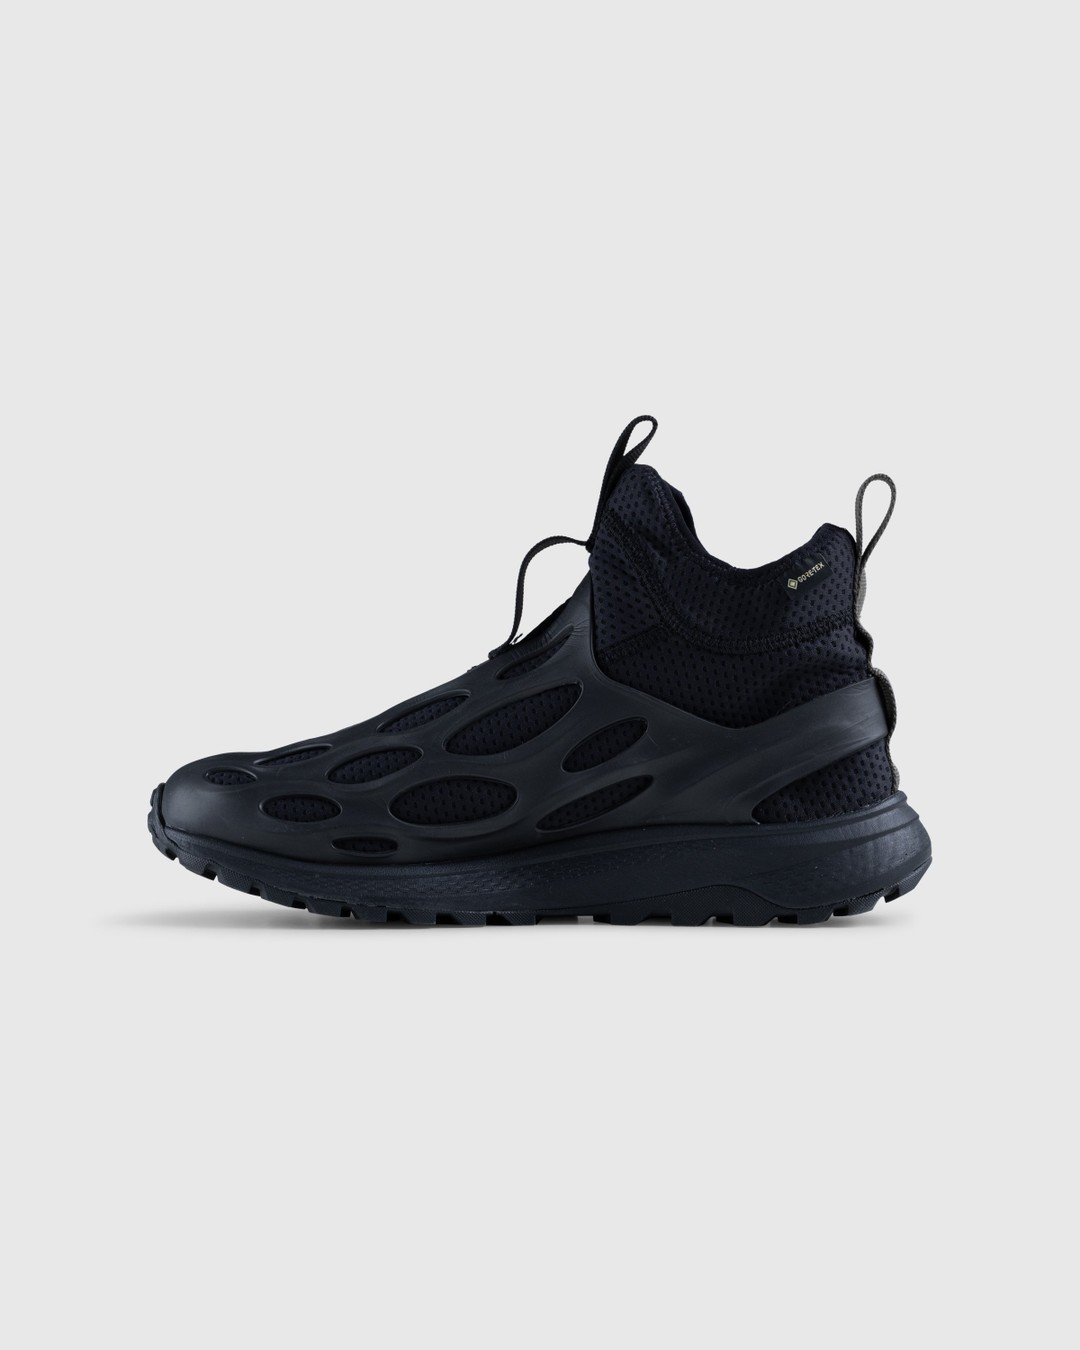 Merrell – Hydro Runner Mid GTX Black  - Sneakers - Black - Image 2